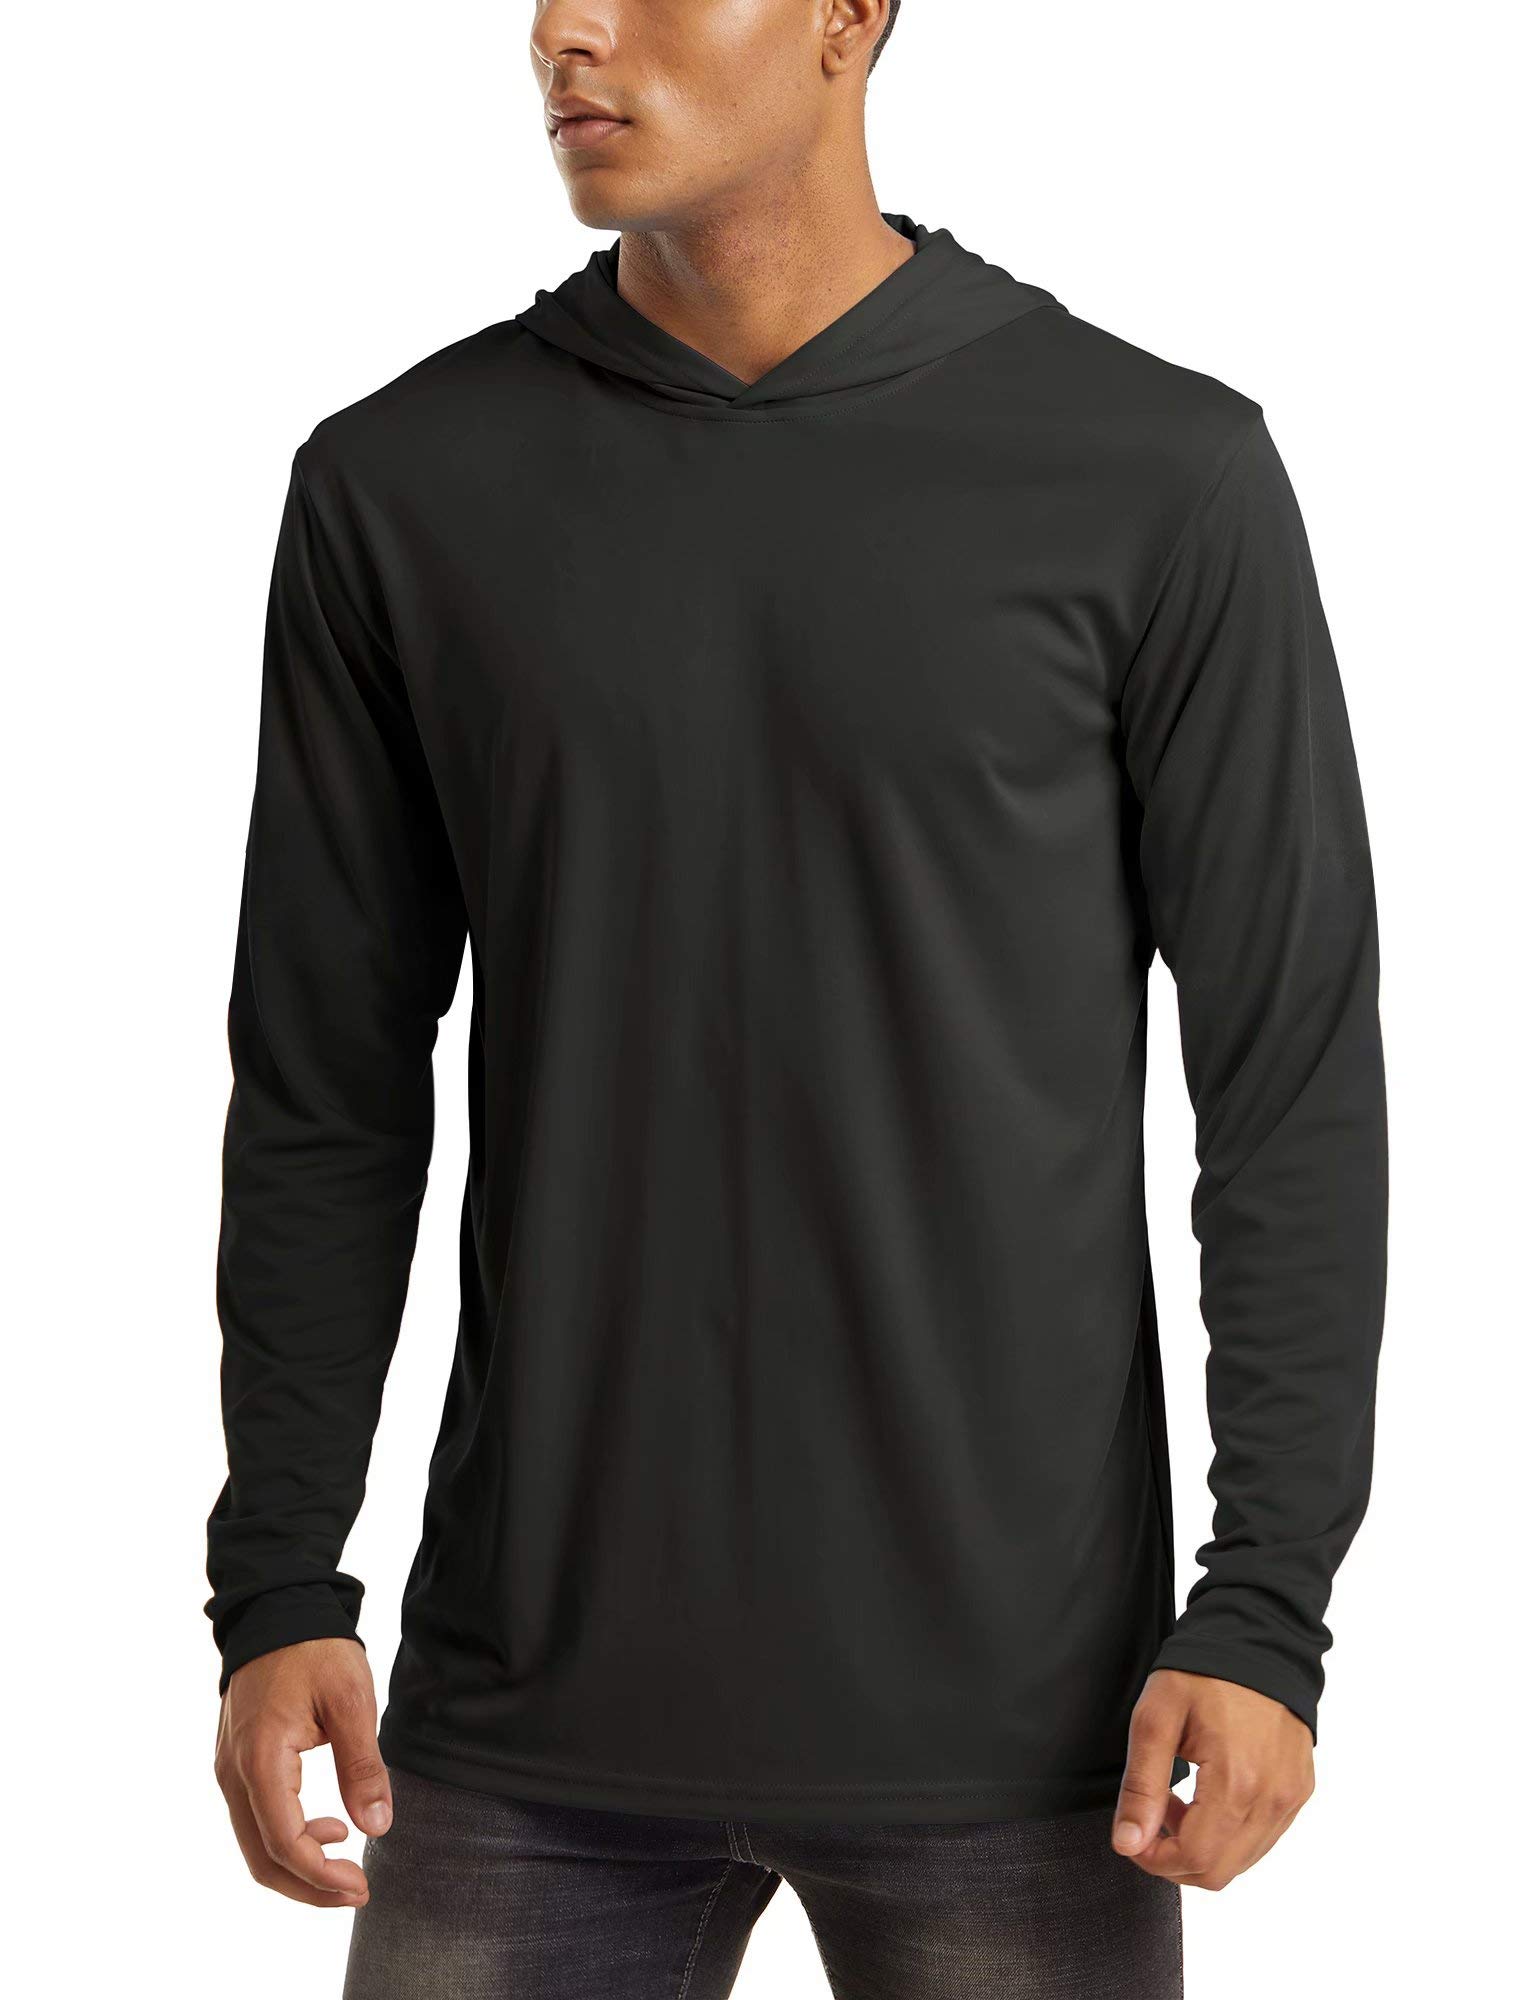 MAGCOMSEN Men's Long Sleeve Sun Shirts UPF 50+ Tees 1/4 Zip Up Fishing Running Rash Guard T-shirts Outdoor Shirt